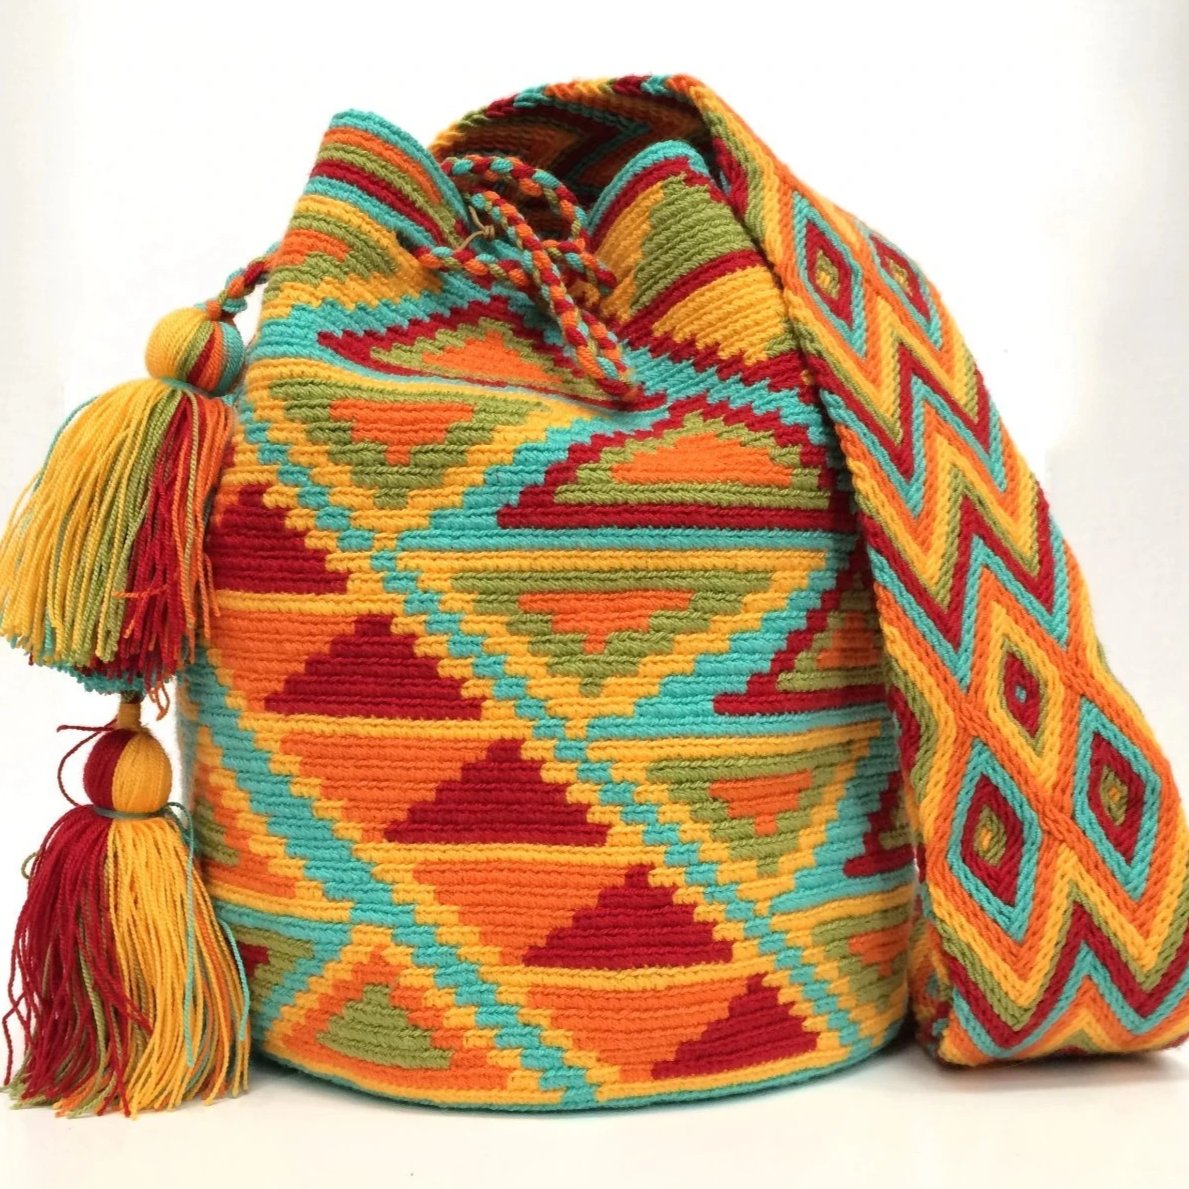 SALE - B. Rocky Bag, Handmade Wayuu Bag